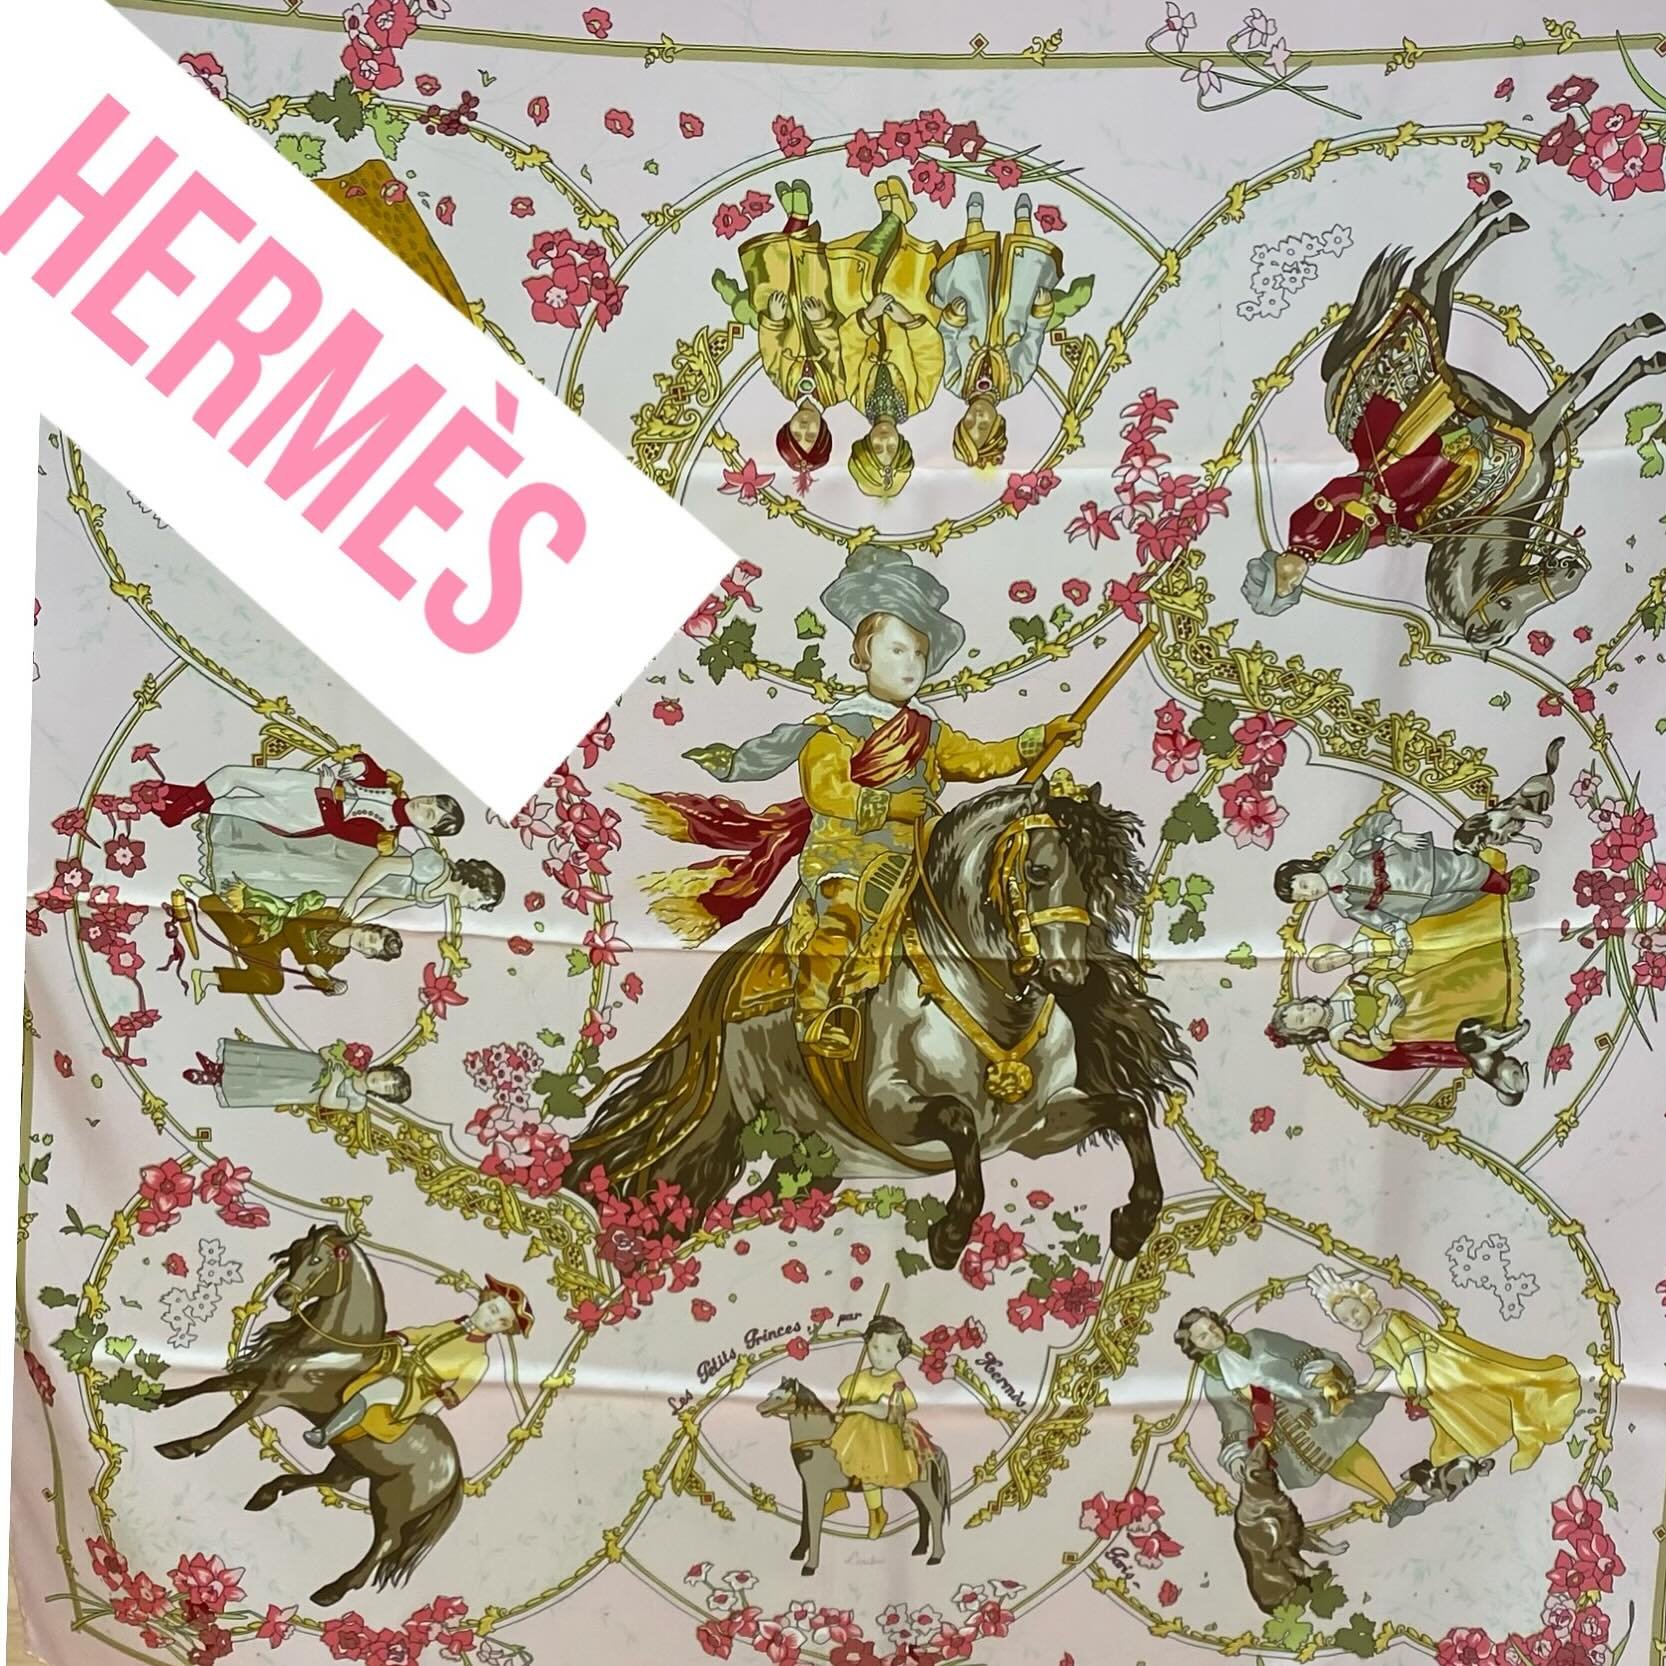 Herm&egrave;s Scarf - Petite Princes par Herm&egrave;s Pretty in Pink #hermesscarf #redeuxapparel #consignmentboutique #shoplocal #designerscarf